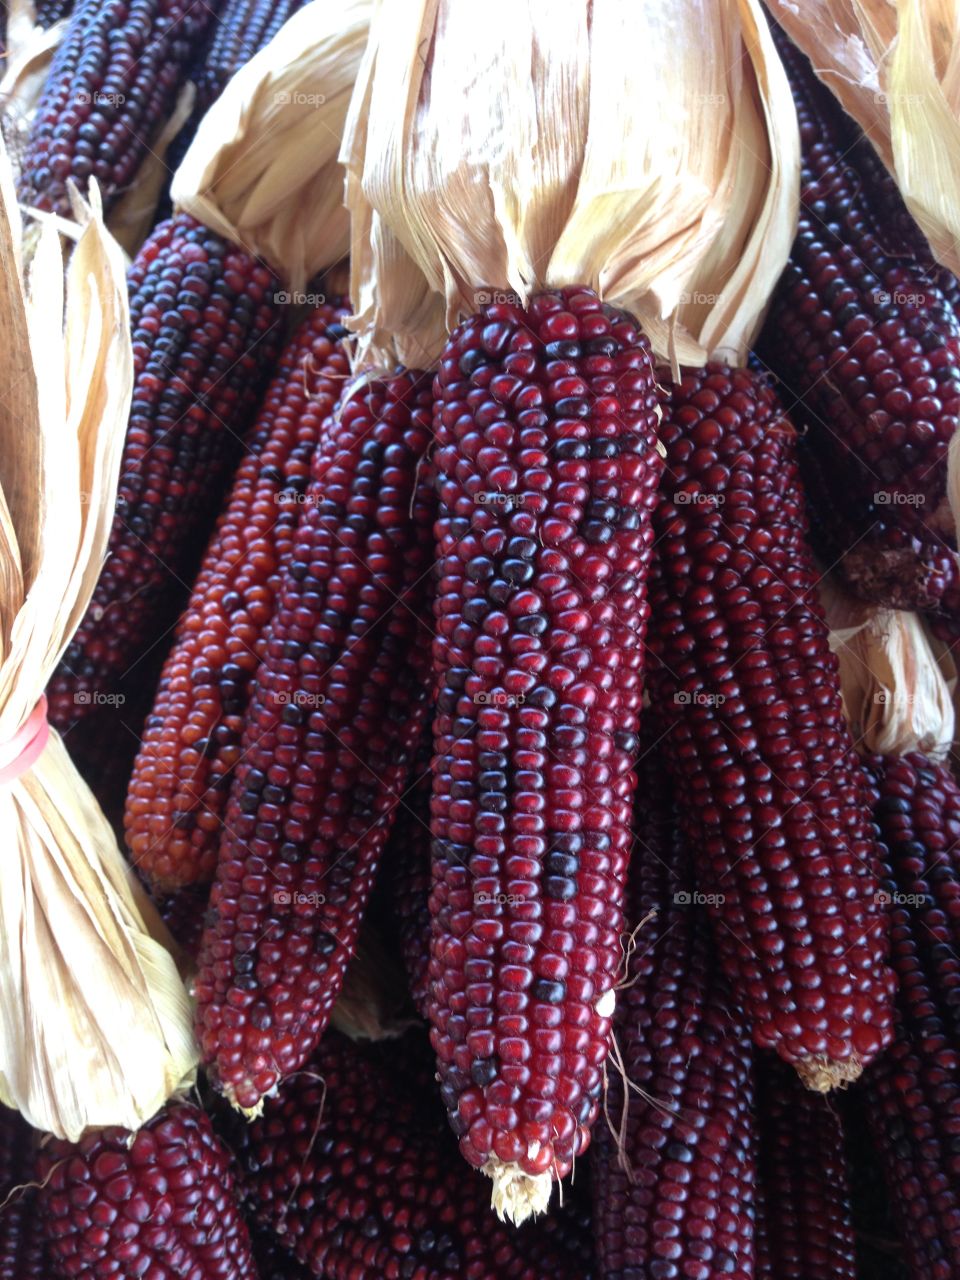 Dried Indian corn